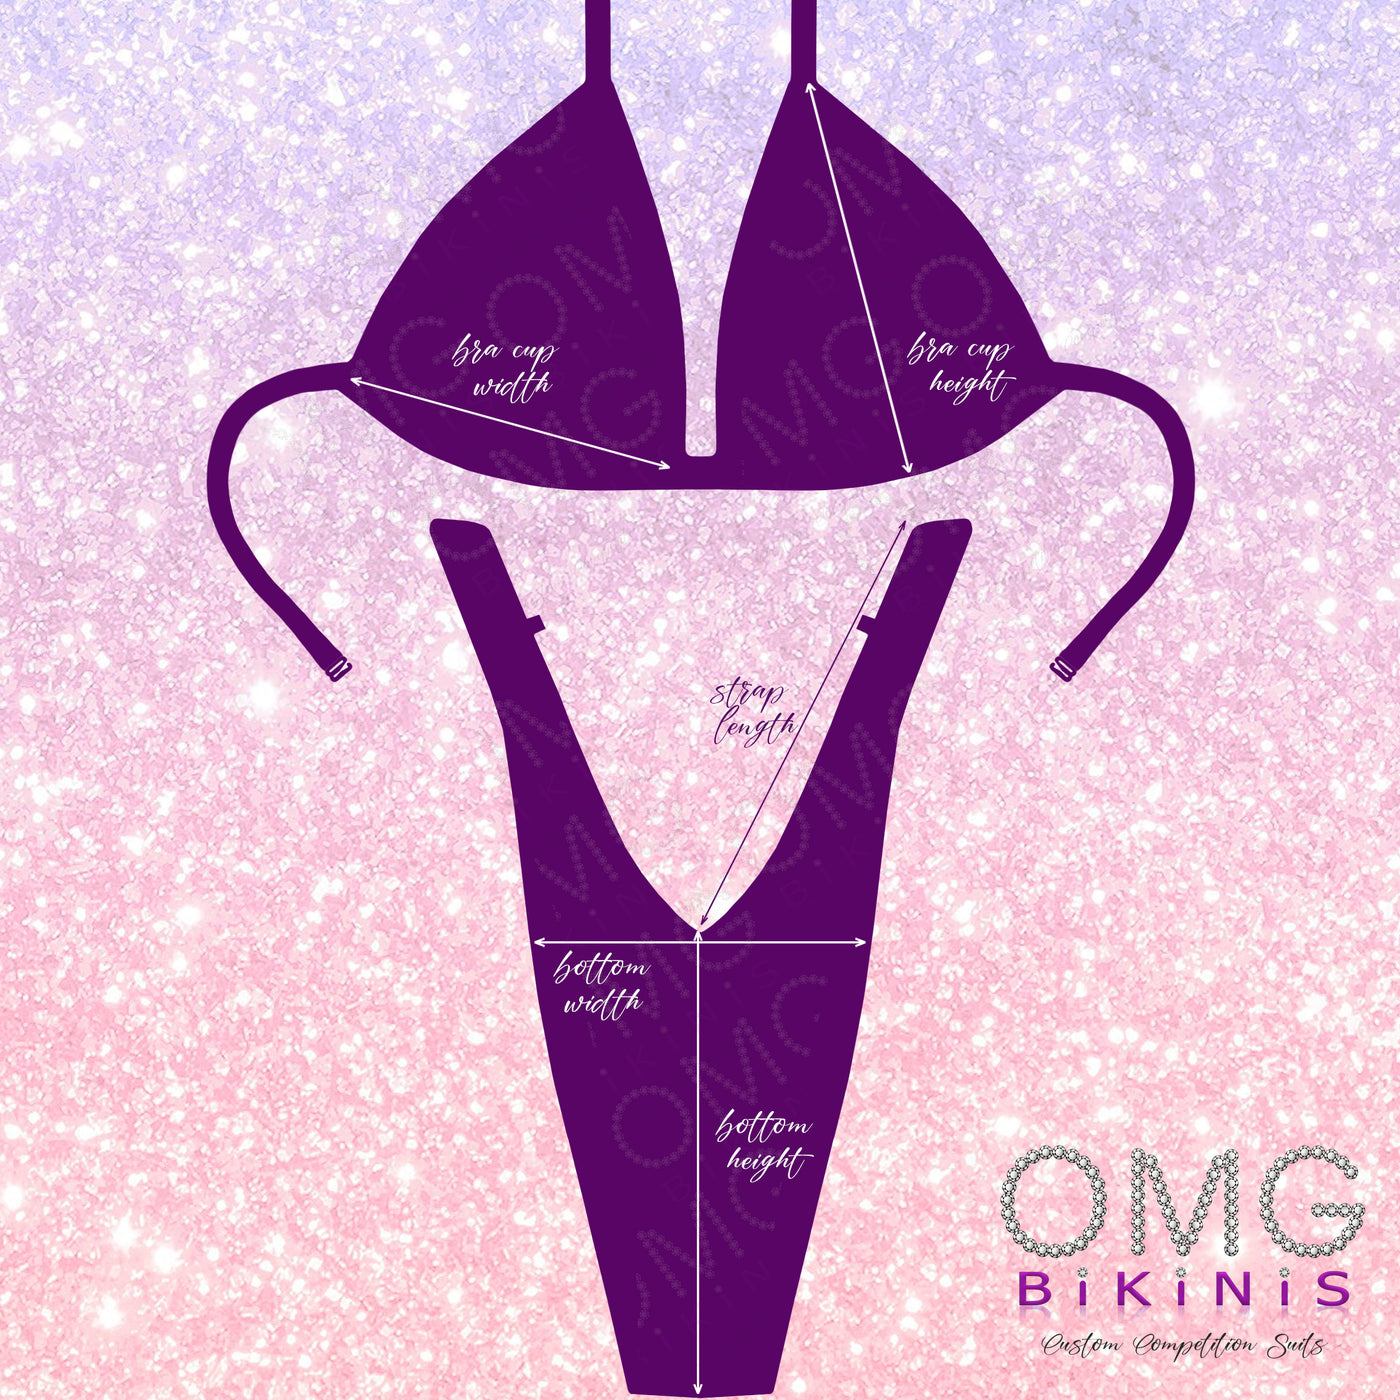 Linda Figure/WPD Competition Suit M/S | OMG Bikinis Rentals